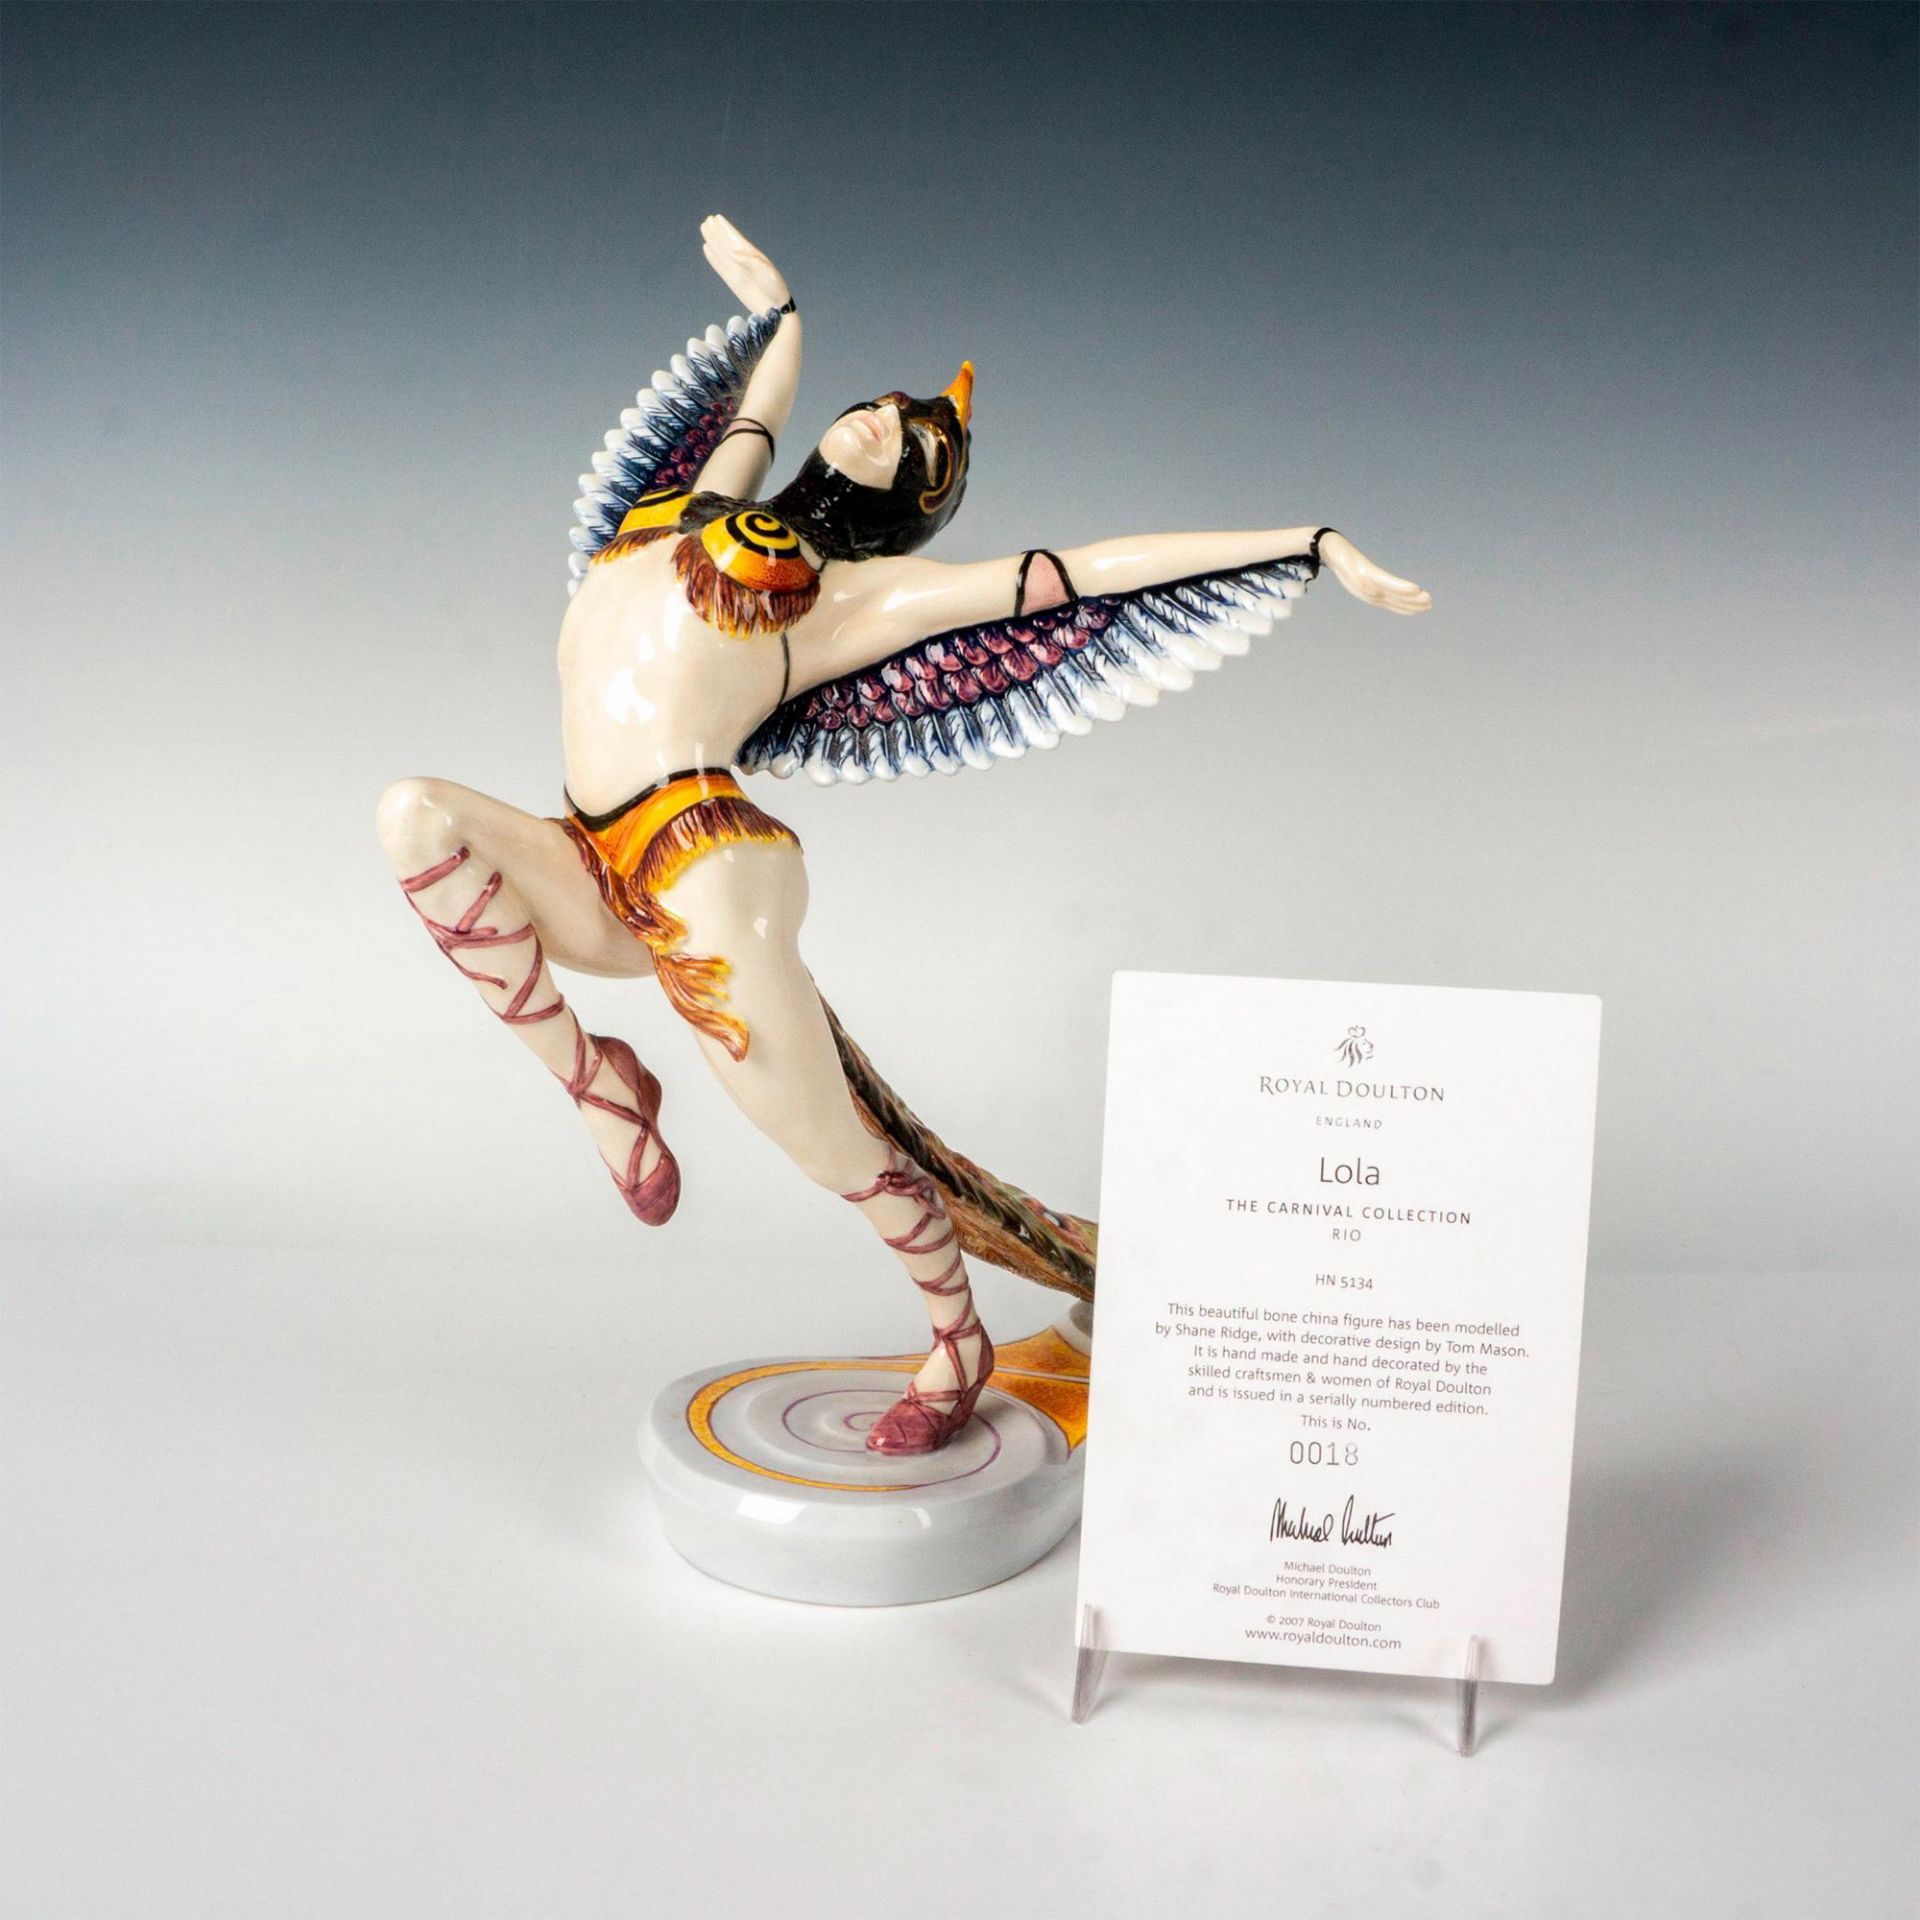 Lola HN5134 - Royal Doulton Figurine - Image 2 of 5